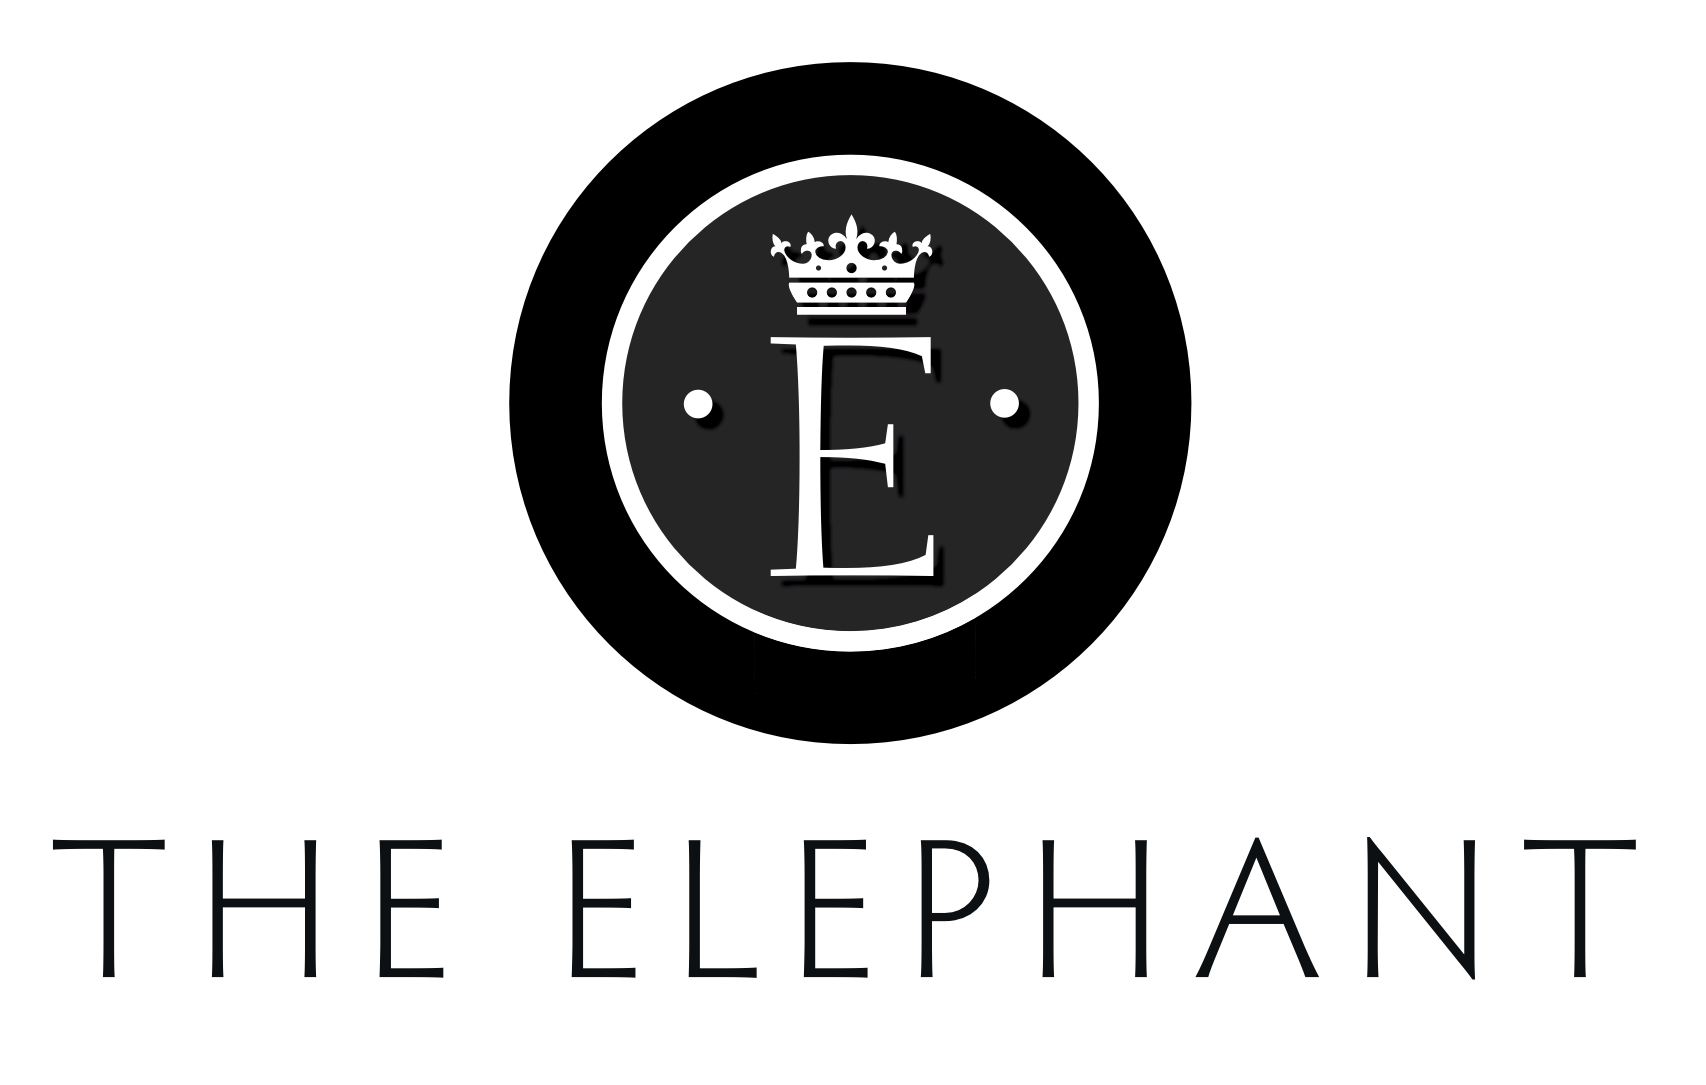 The Elephant British Pub